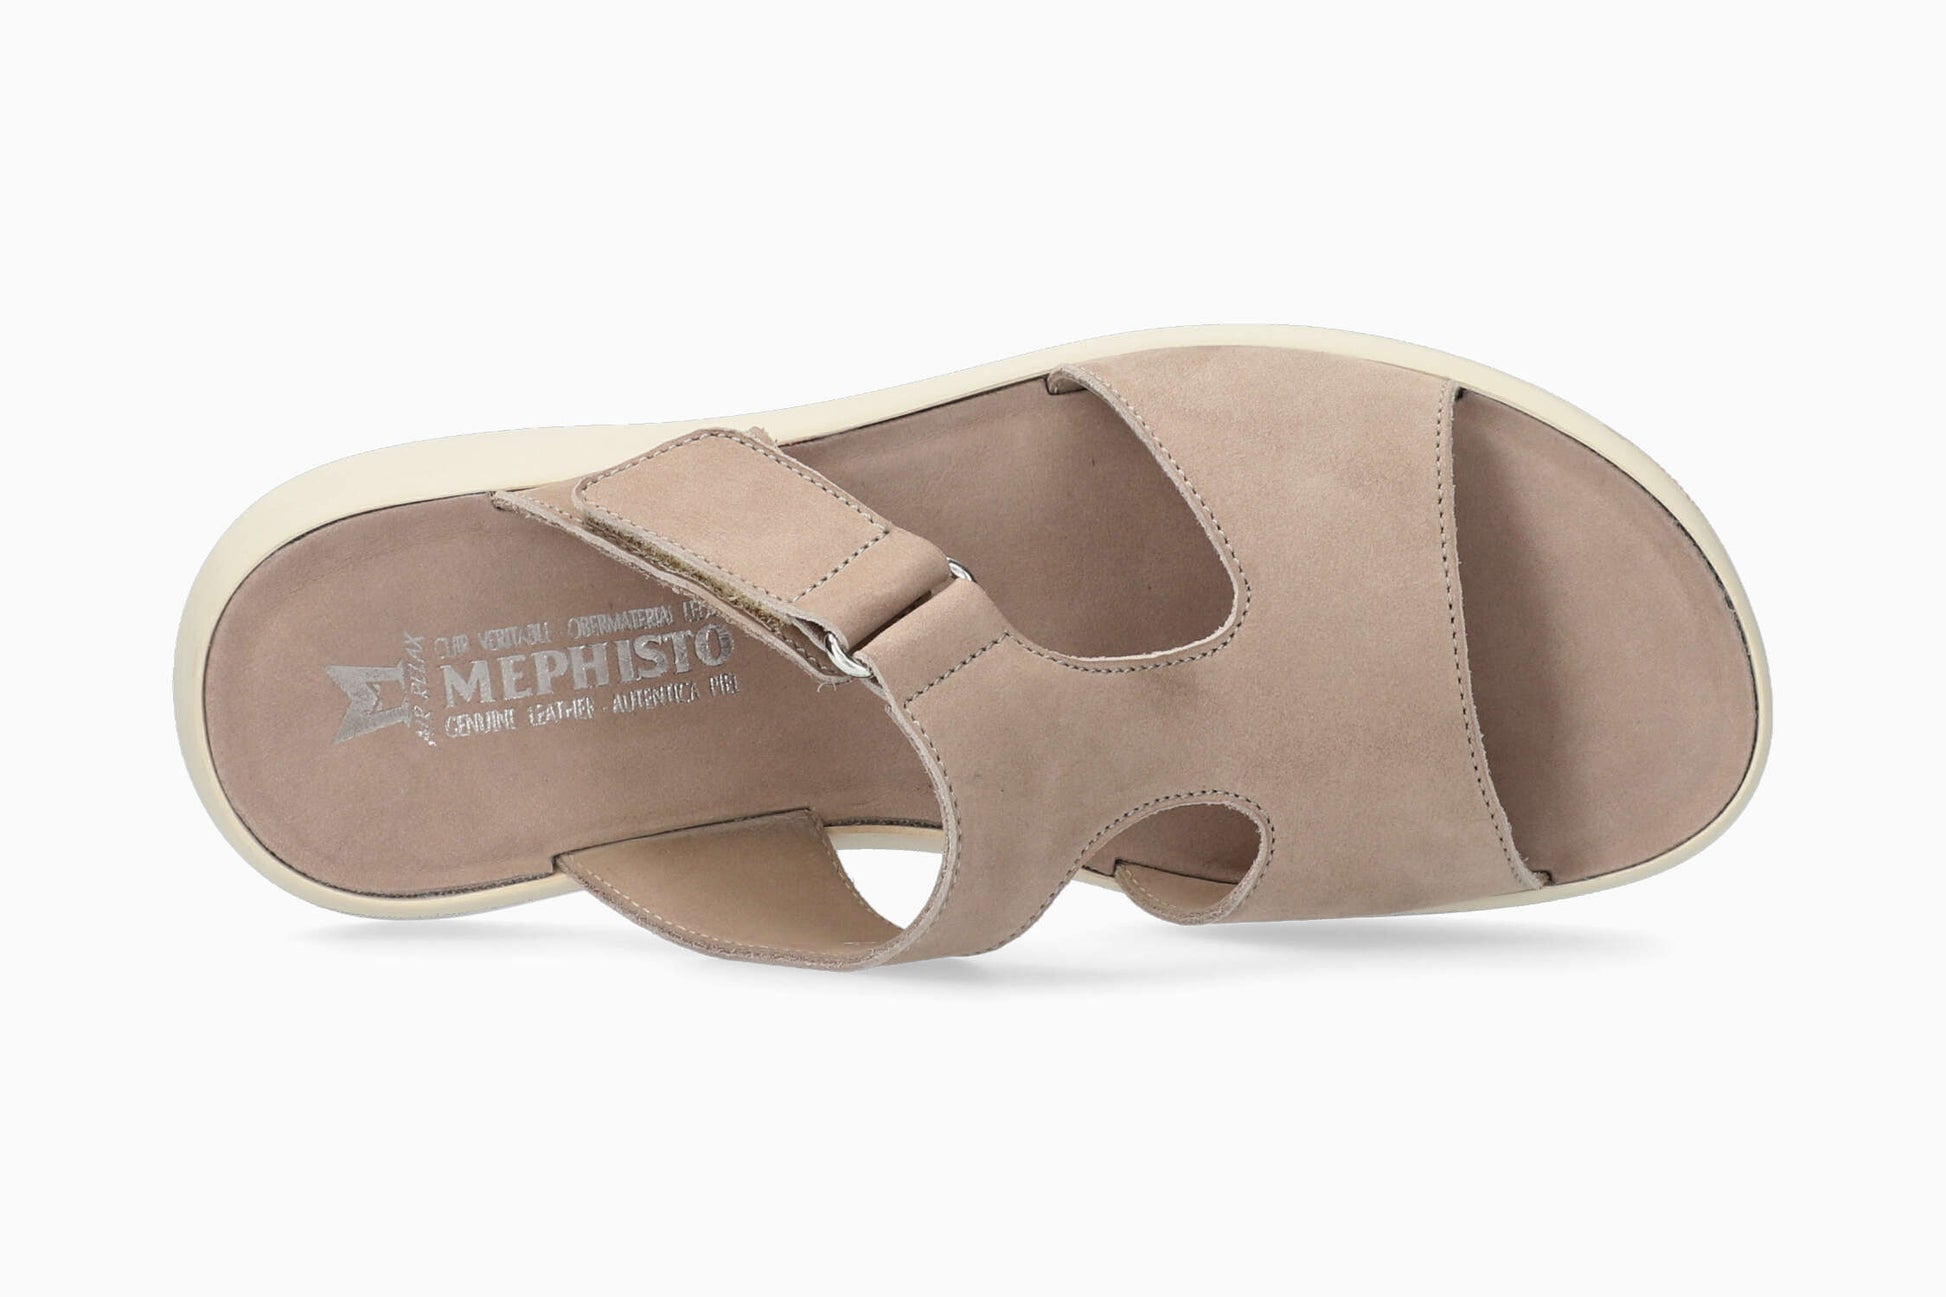 Mephisto Teeny Women's Sandal Light Taupe Top